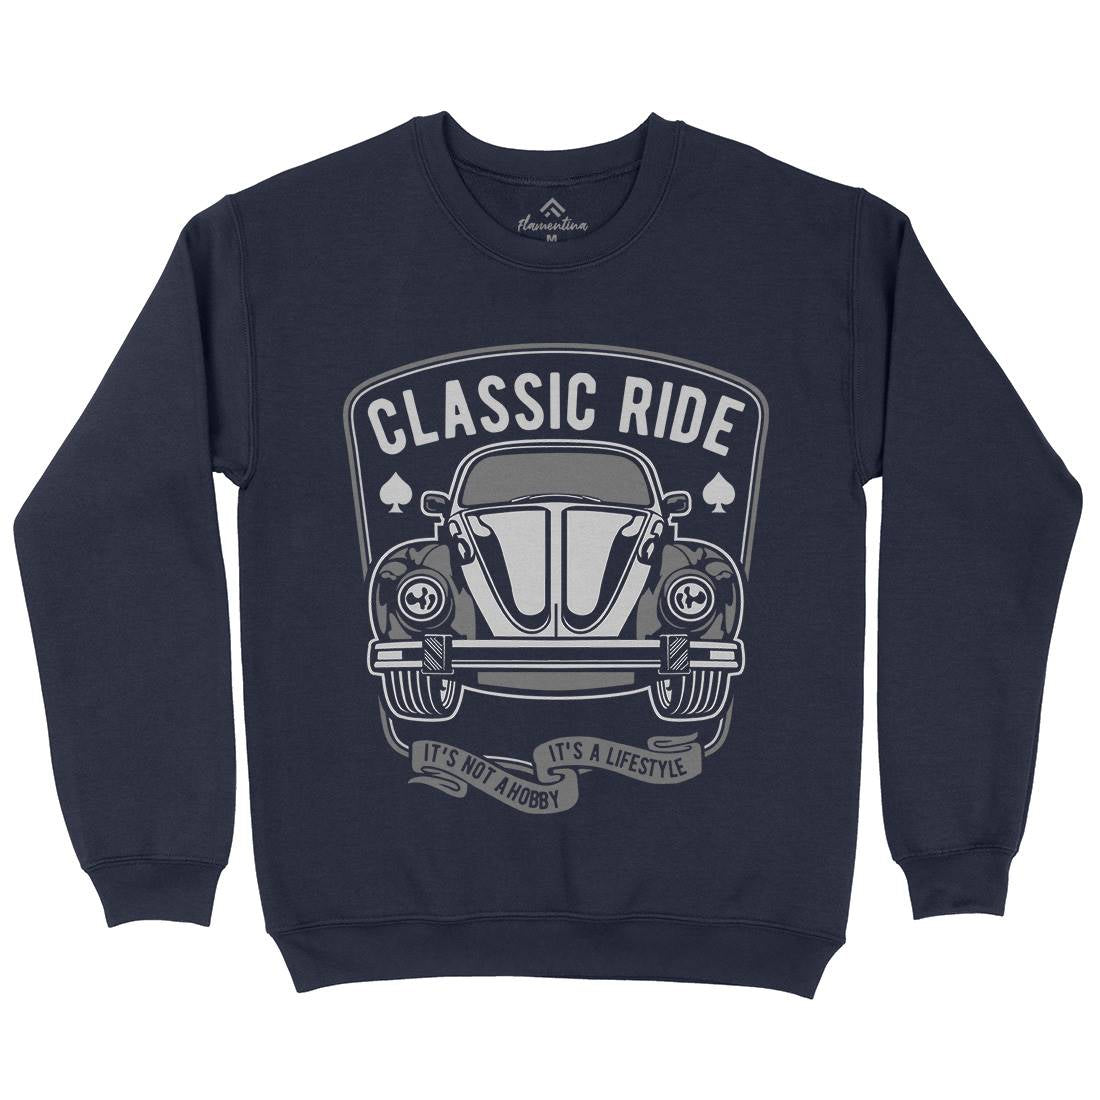 Classic Ride Mens Crew Neck Sweatshirt Cars B195